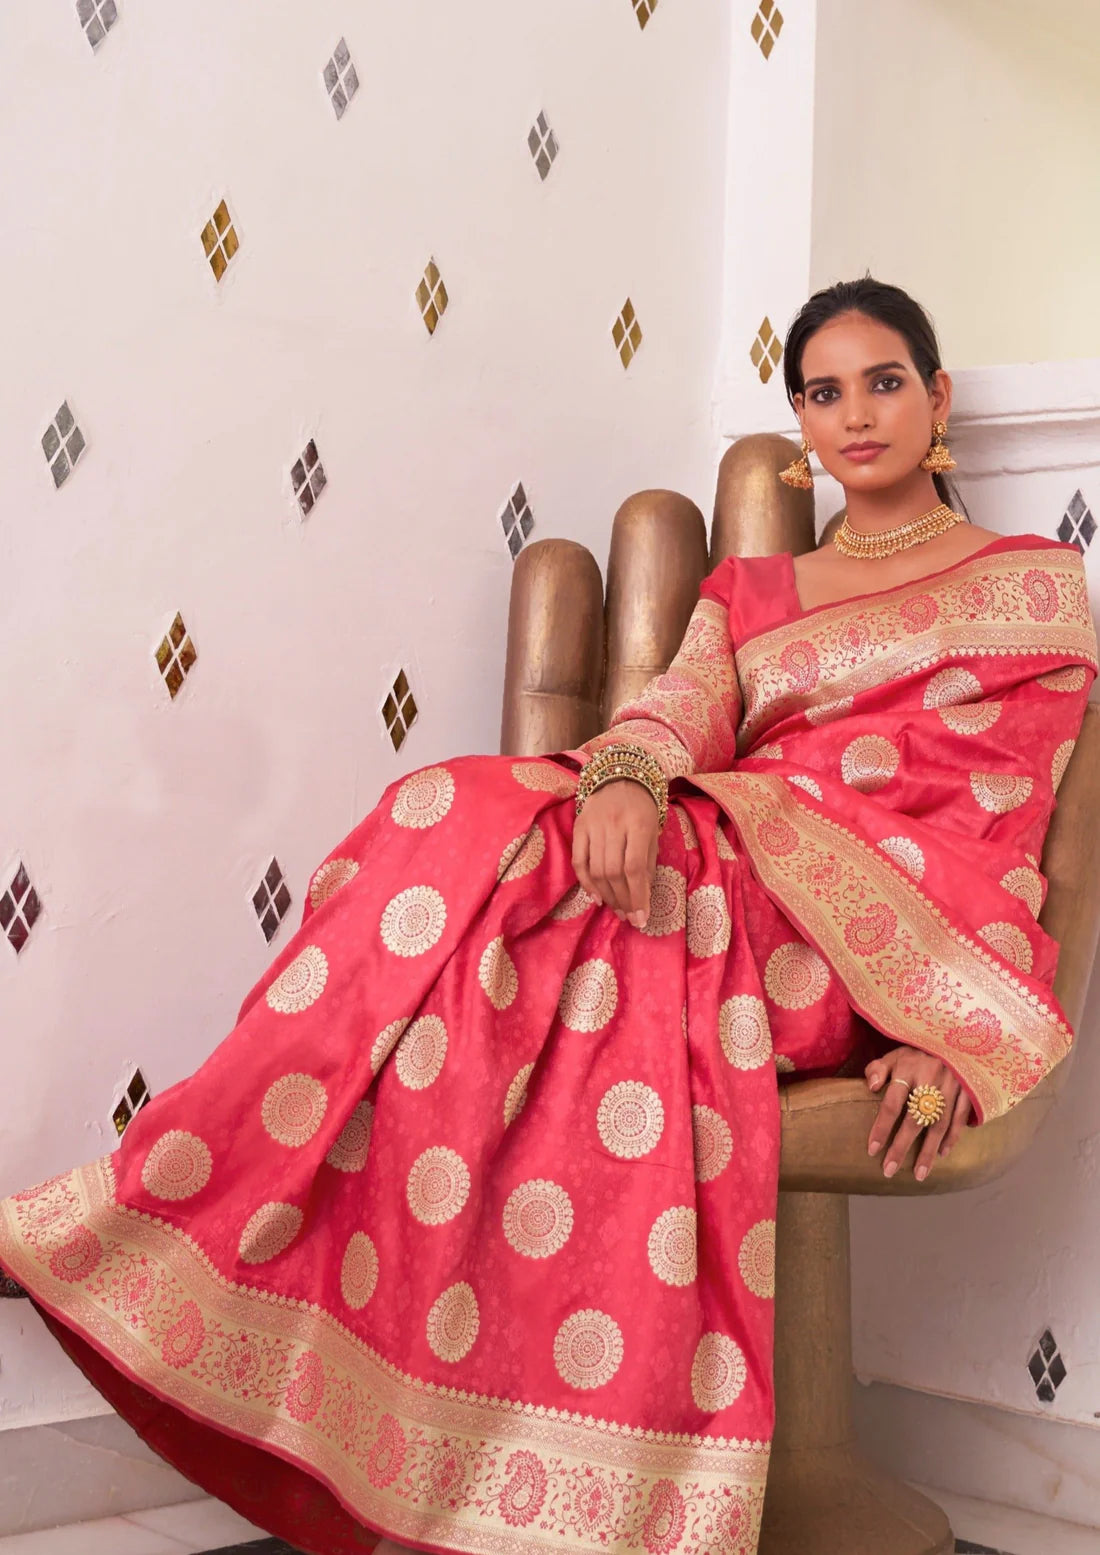 Handloom banarasi silk sarees online shopping india for bride usa.